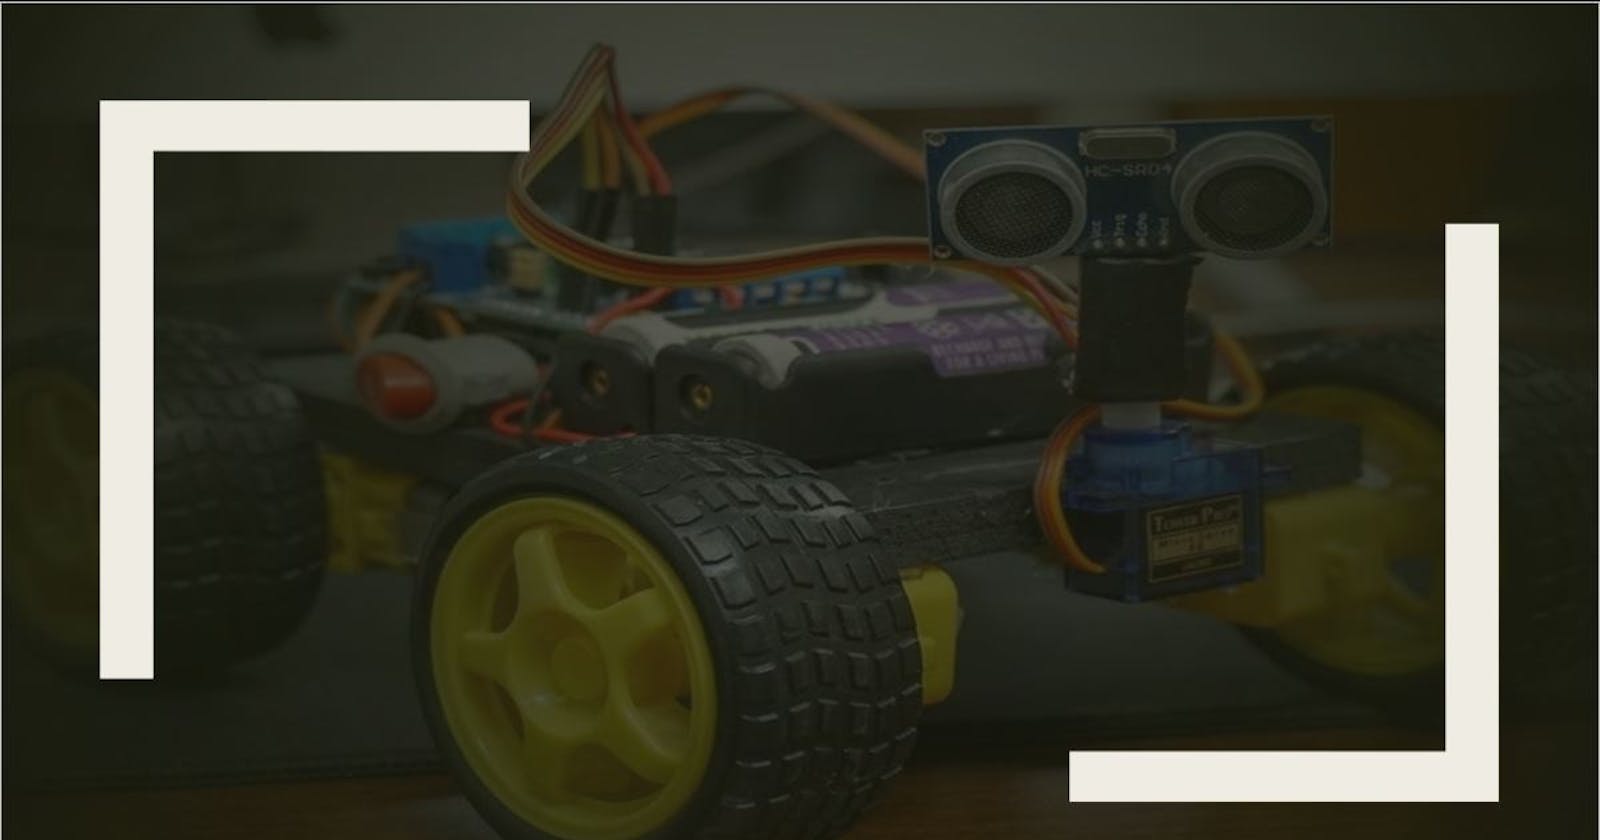 How I made Obstacle Avoiding Robot Car using Arduino